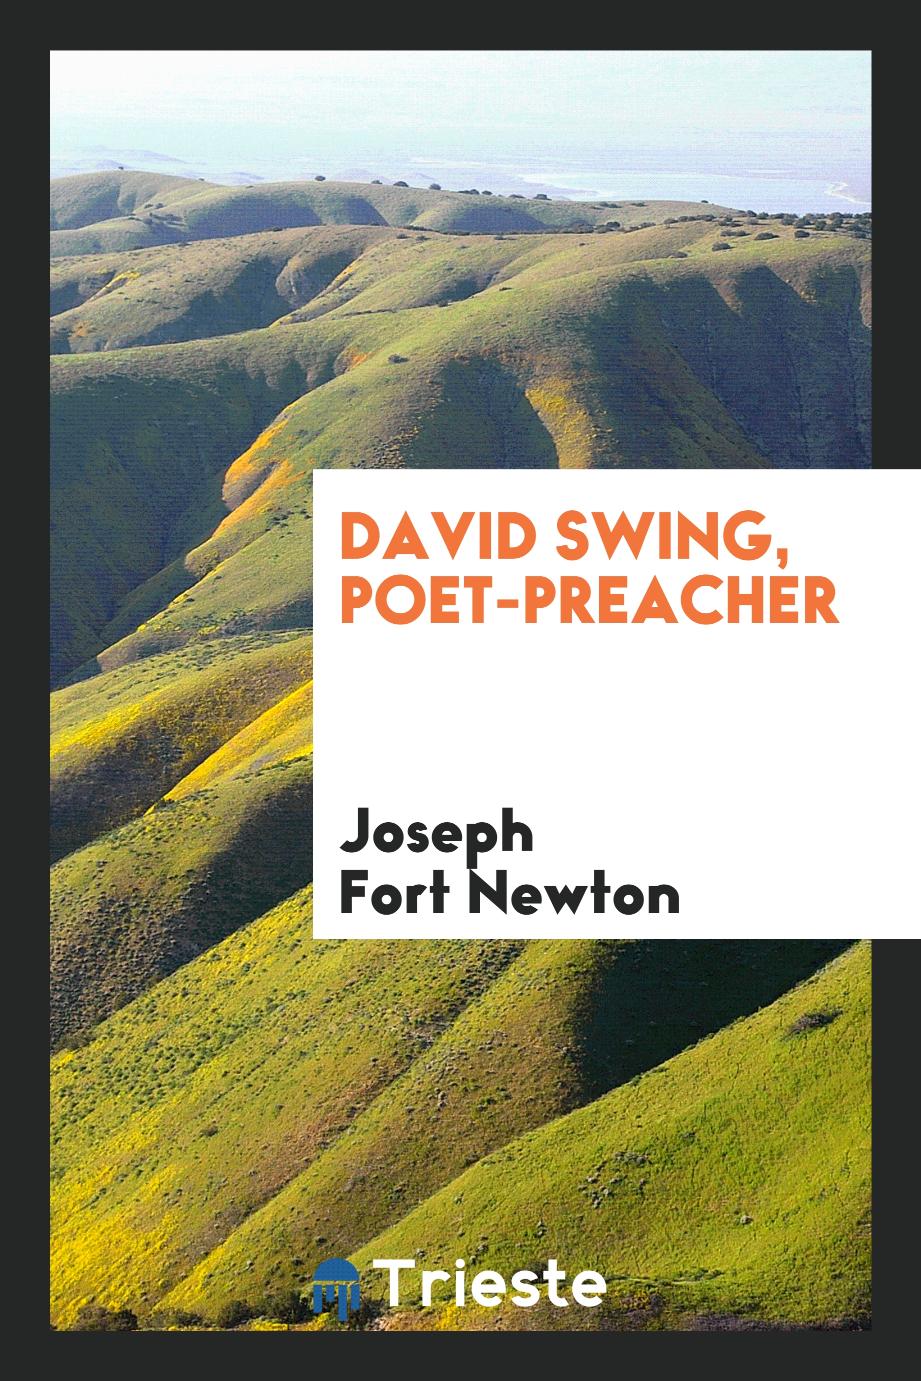 David Swing, poet-preacher